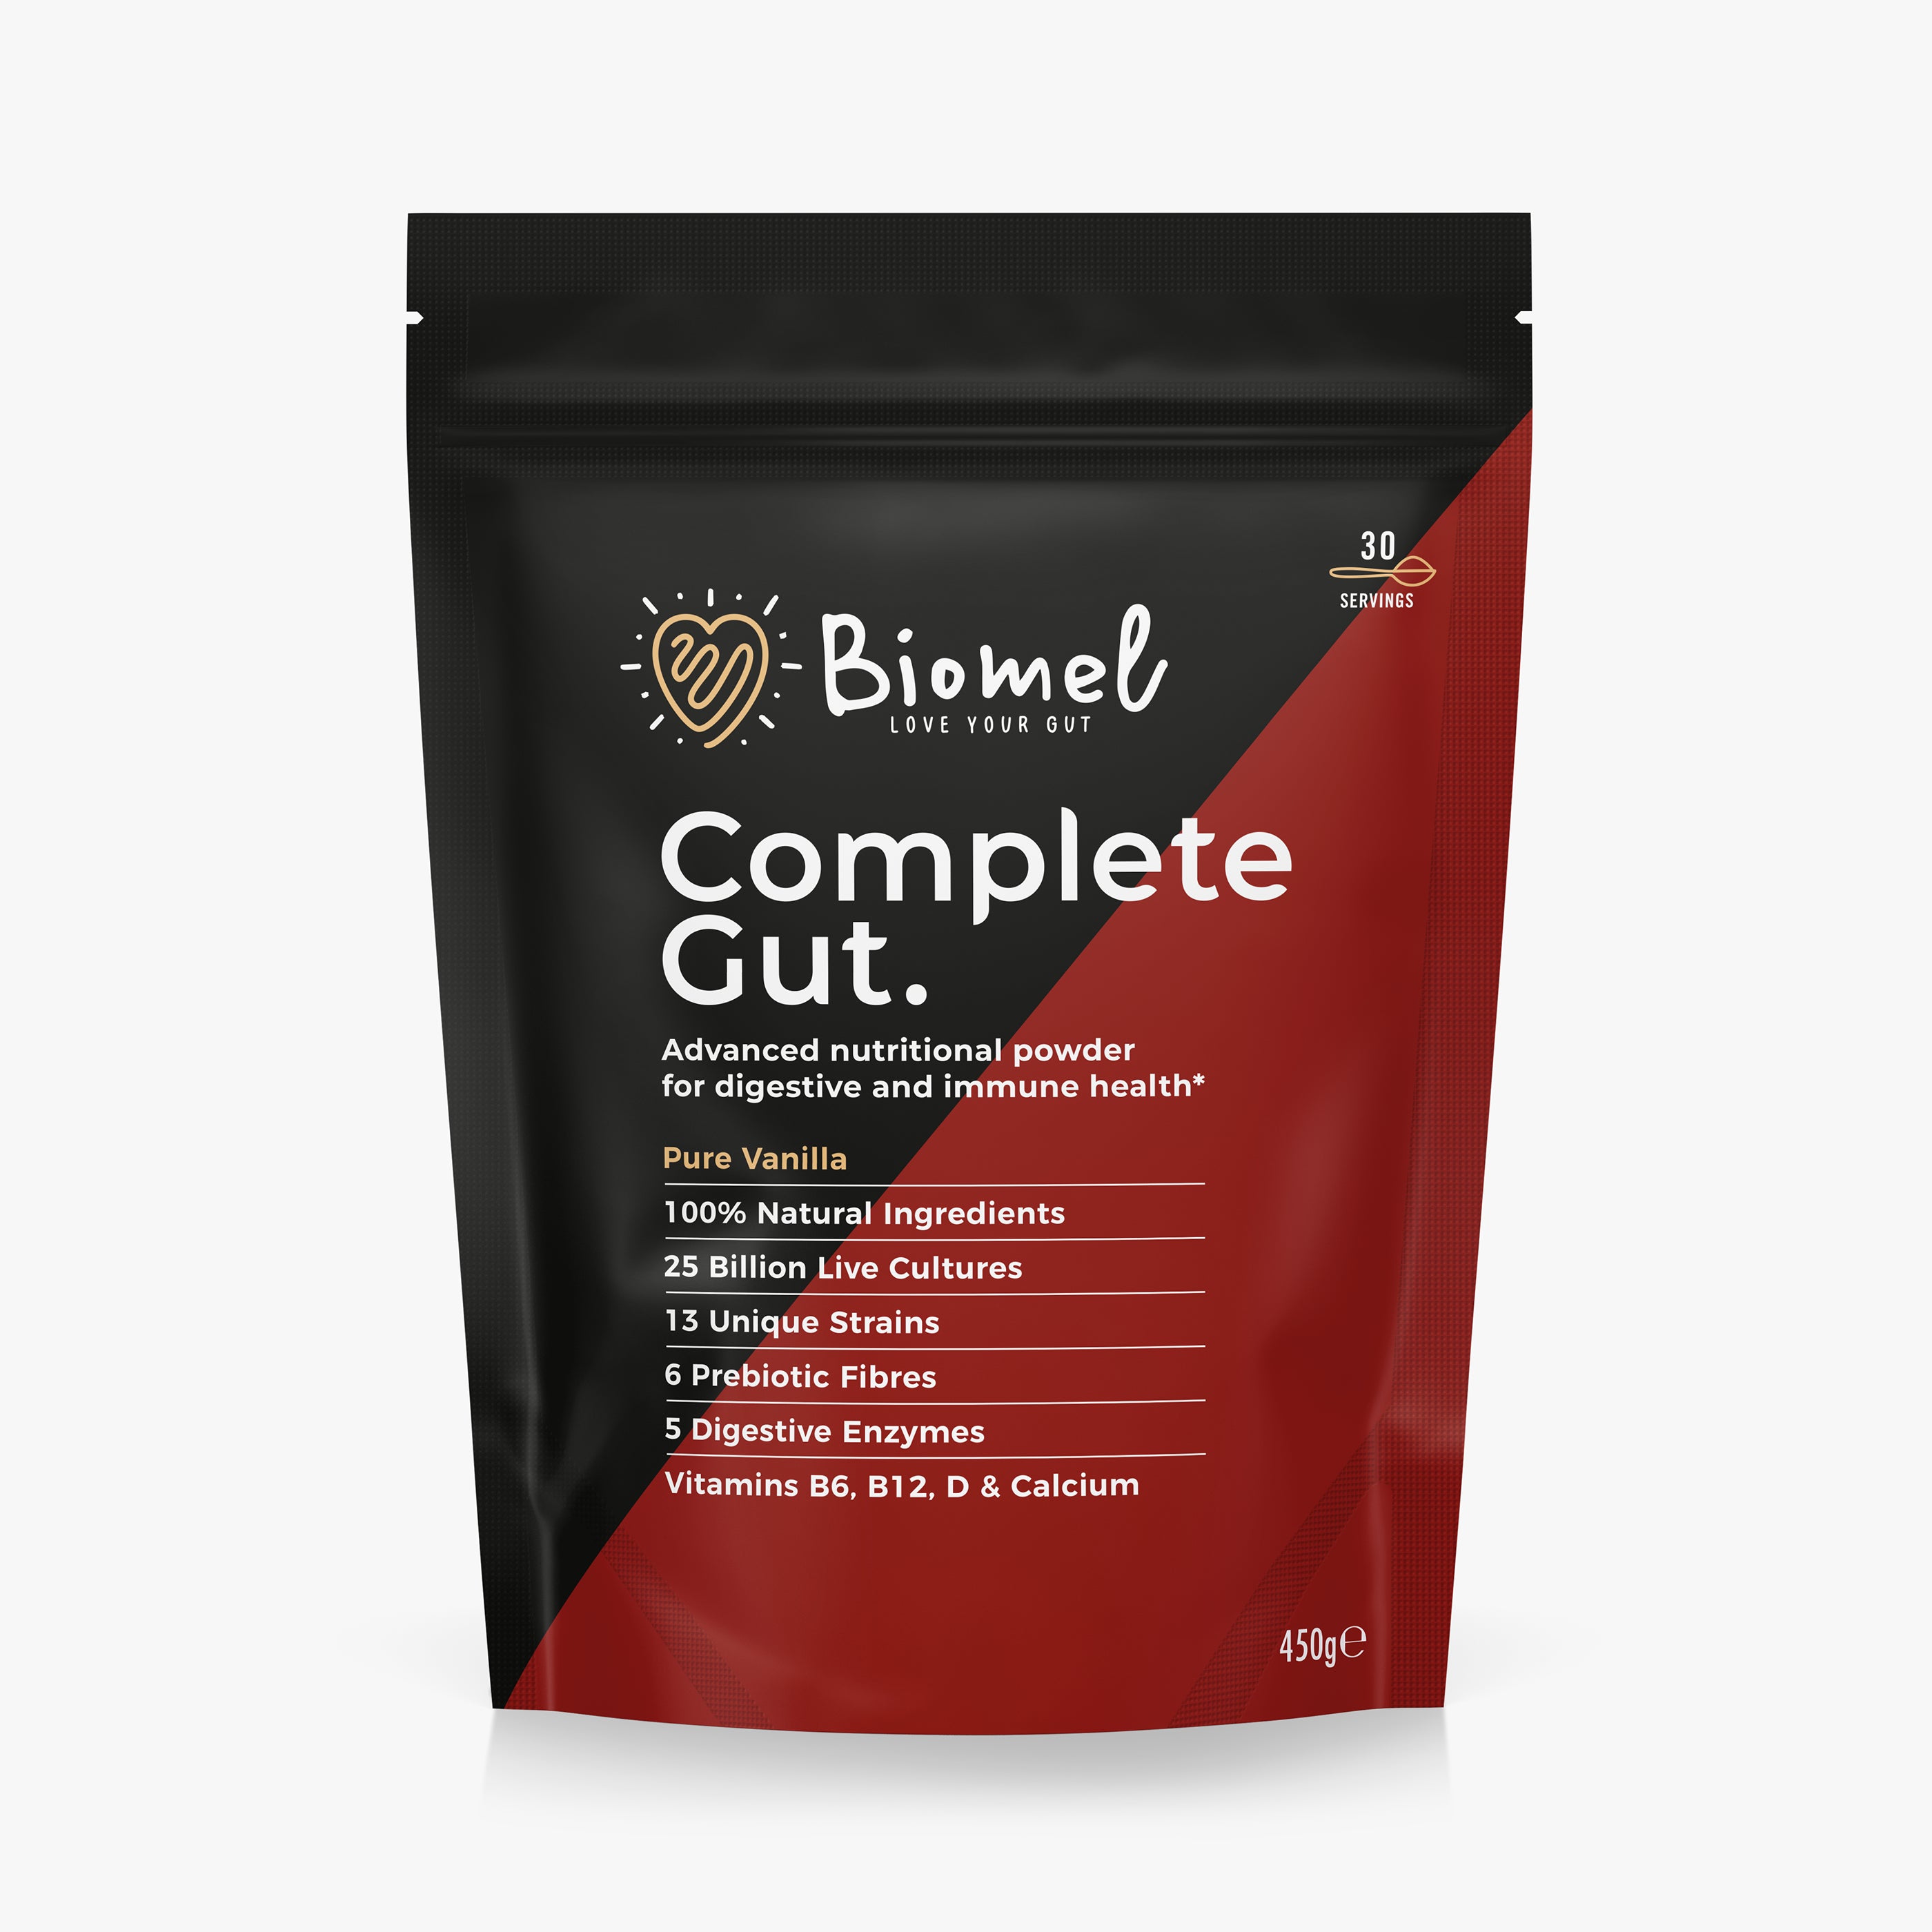 Biomel Complete Gut